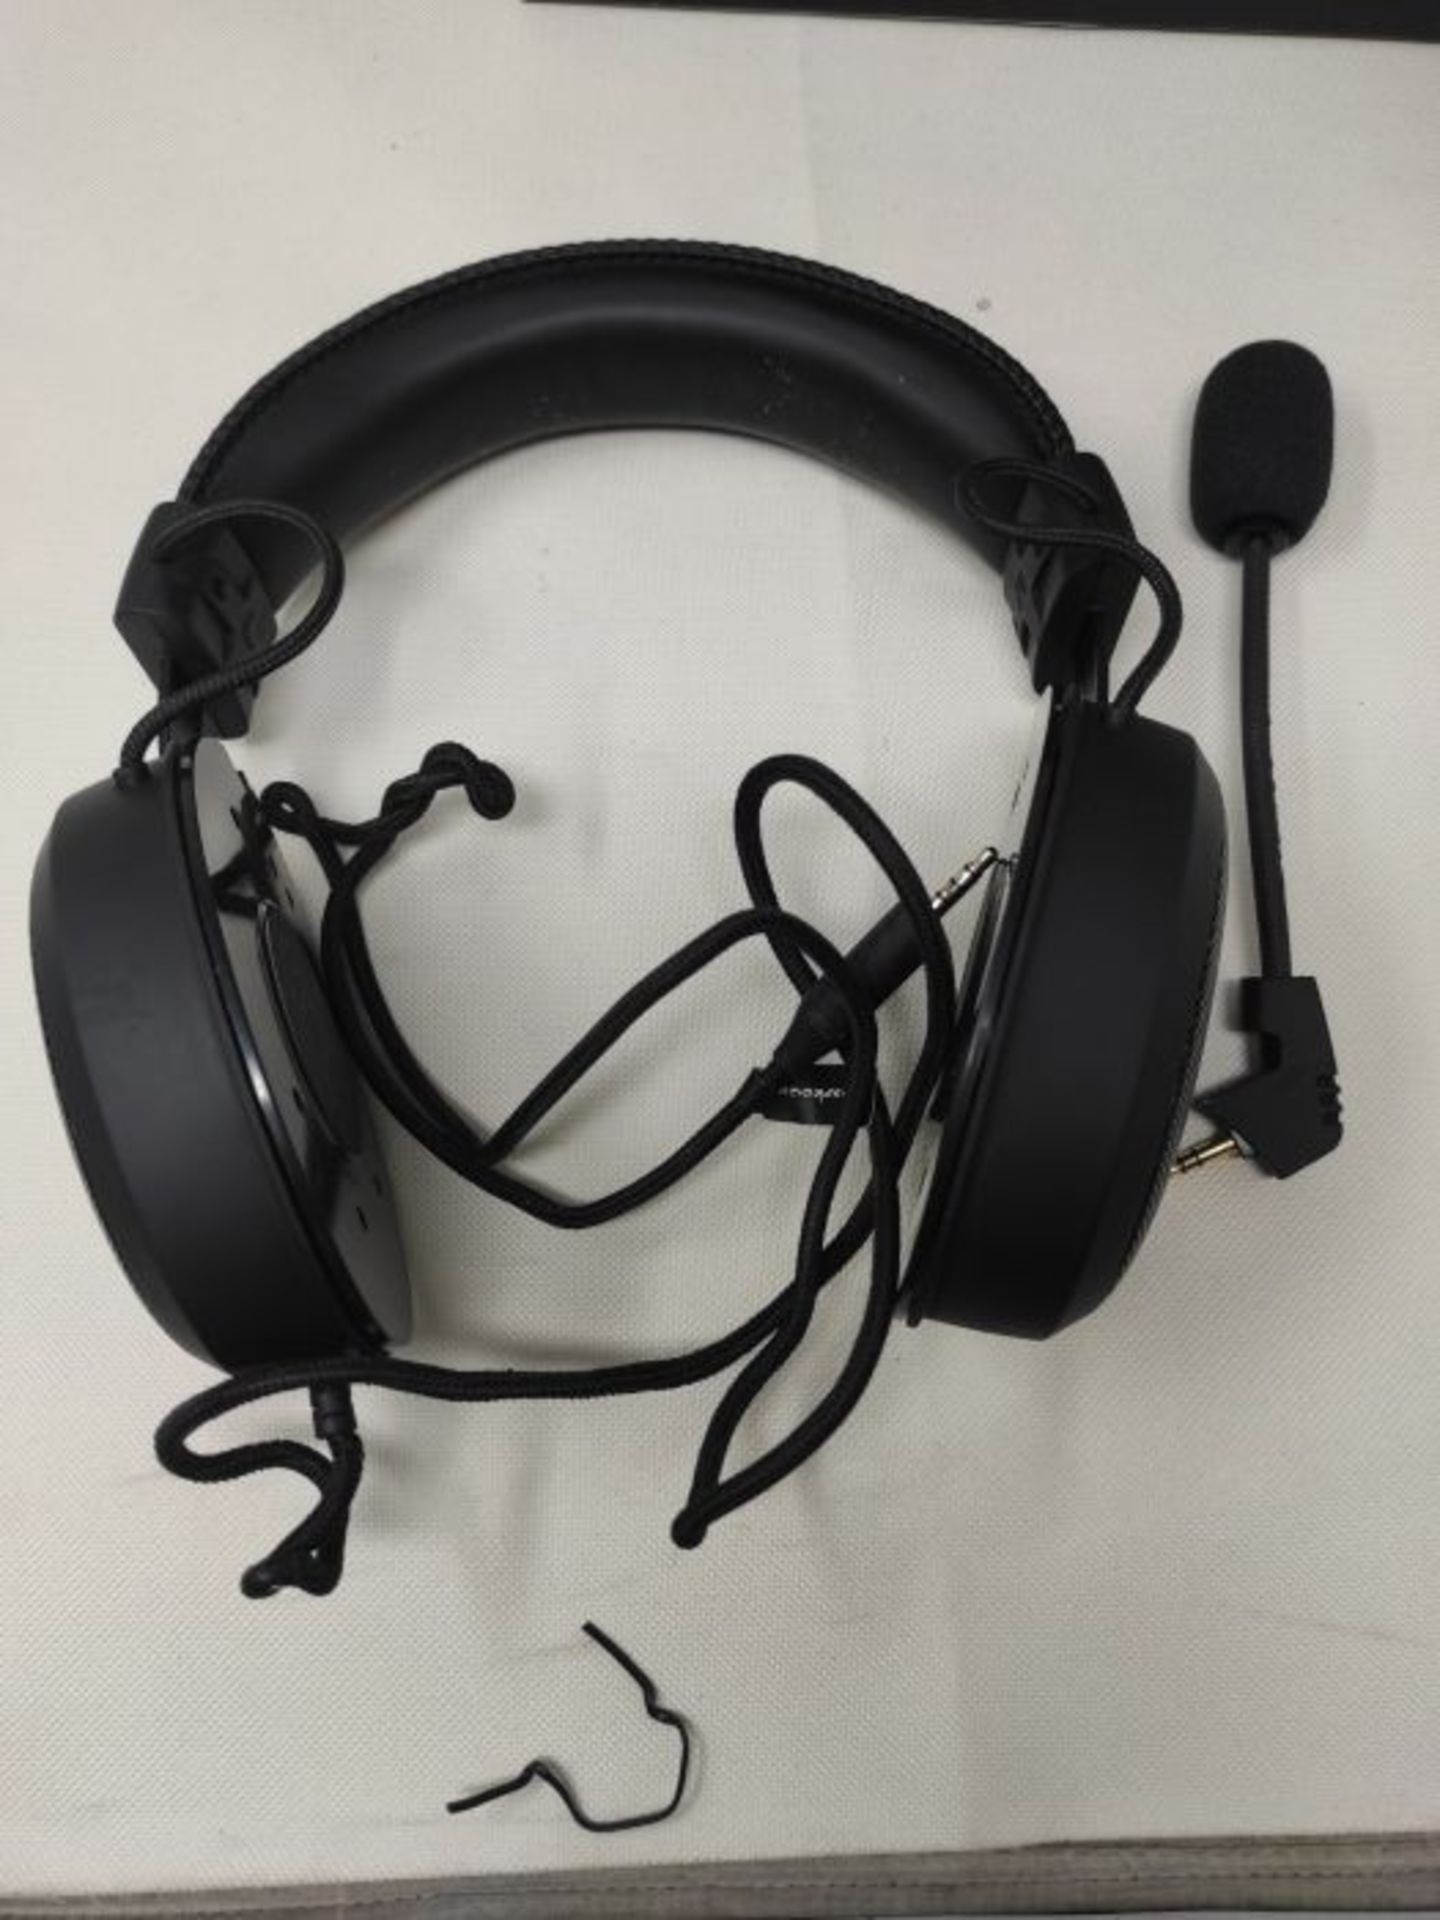 Sharkoon B1 Stereo Gaming Headphones - Black - Image 3 of 3